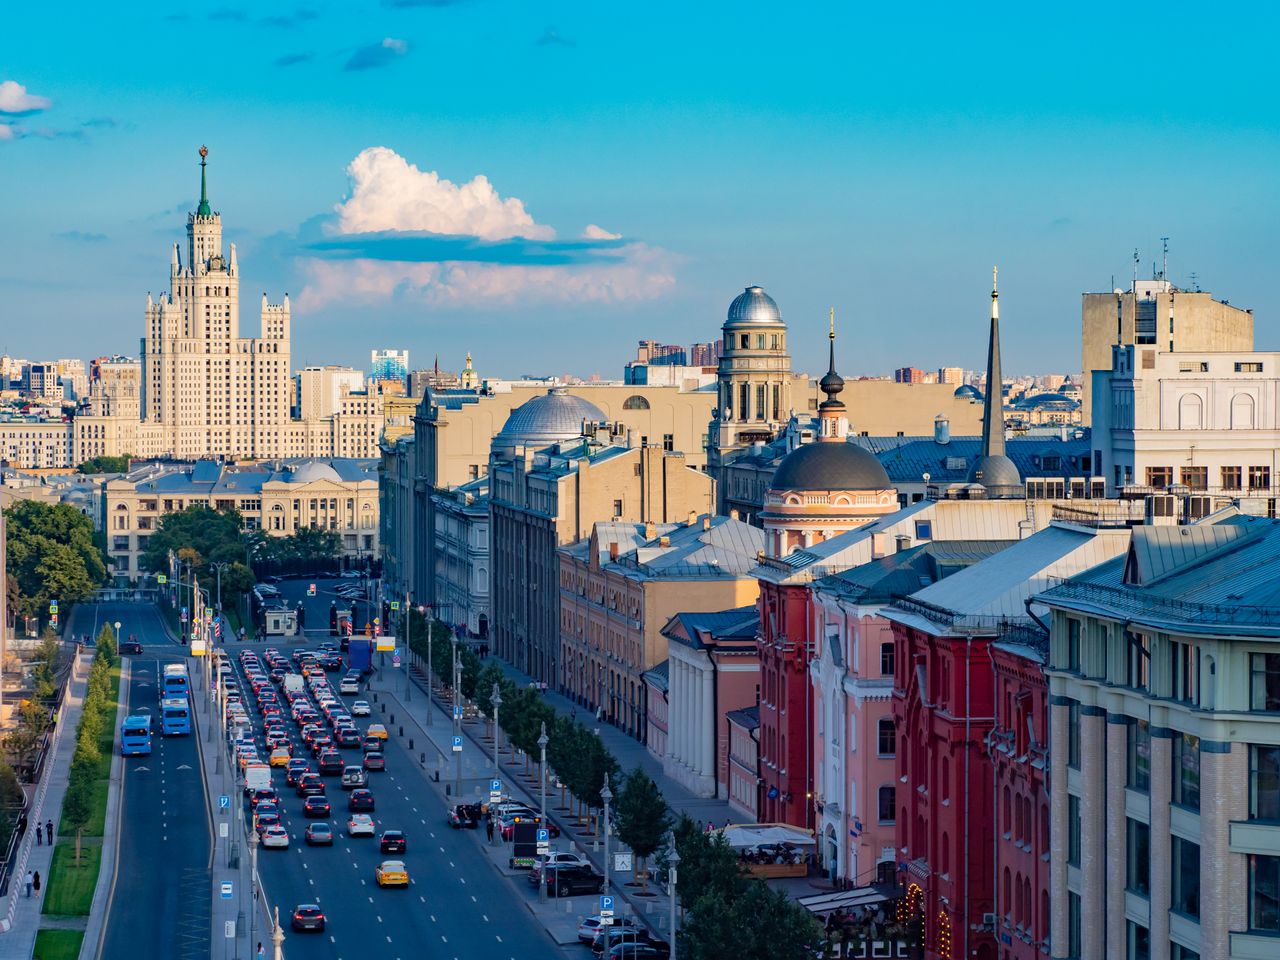 Panoramic Moscow city tour | Цена 21250₽, отзывы, описание экскурсии